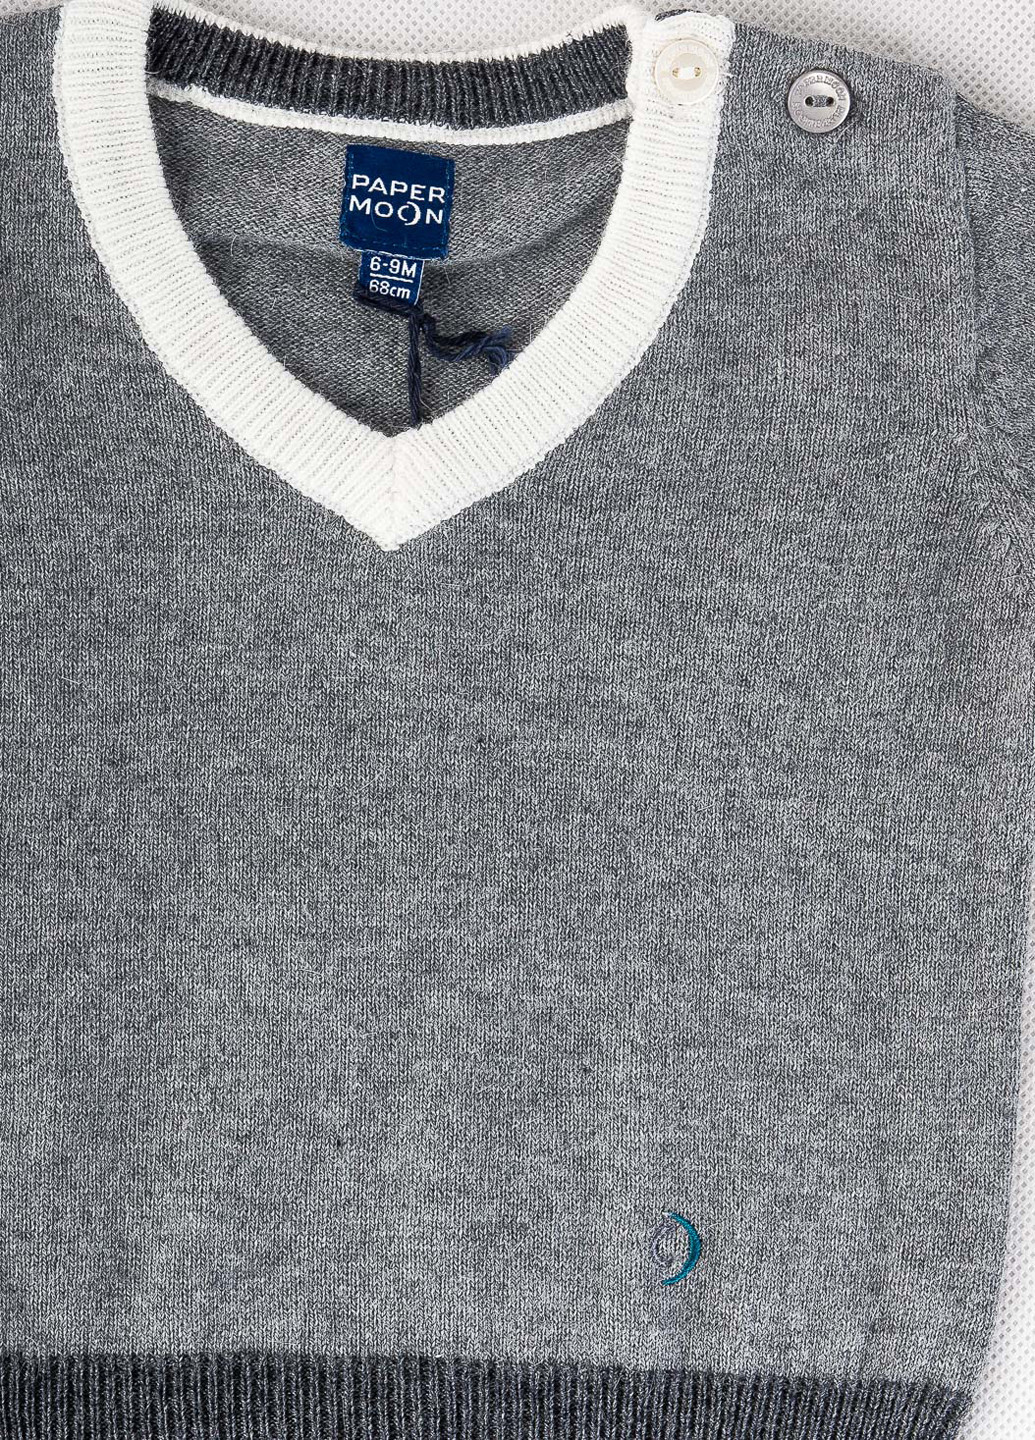 Серый демисезонный пуловер пуловер Paper Moon